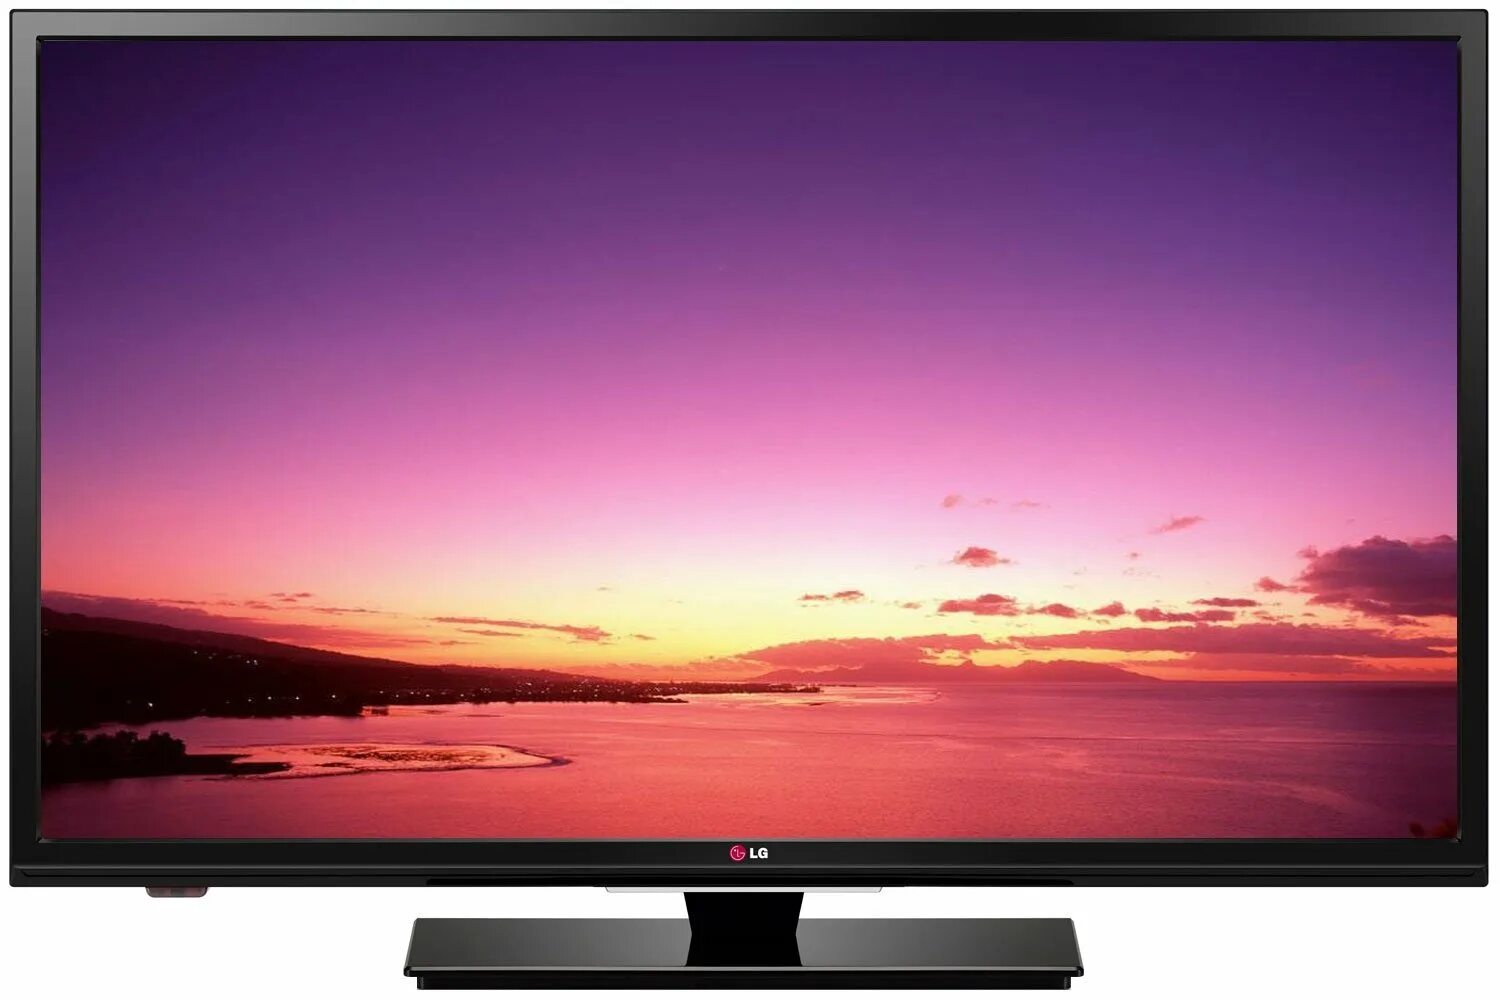 Samsung TV 40 дюйма. Телевизор Samsung 40 дюймов le40c630. TV самсунг led 40. Самсунг лед 40 смарт ТВ. Авито купить телевизор lg